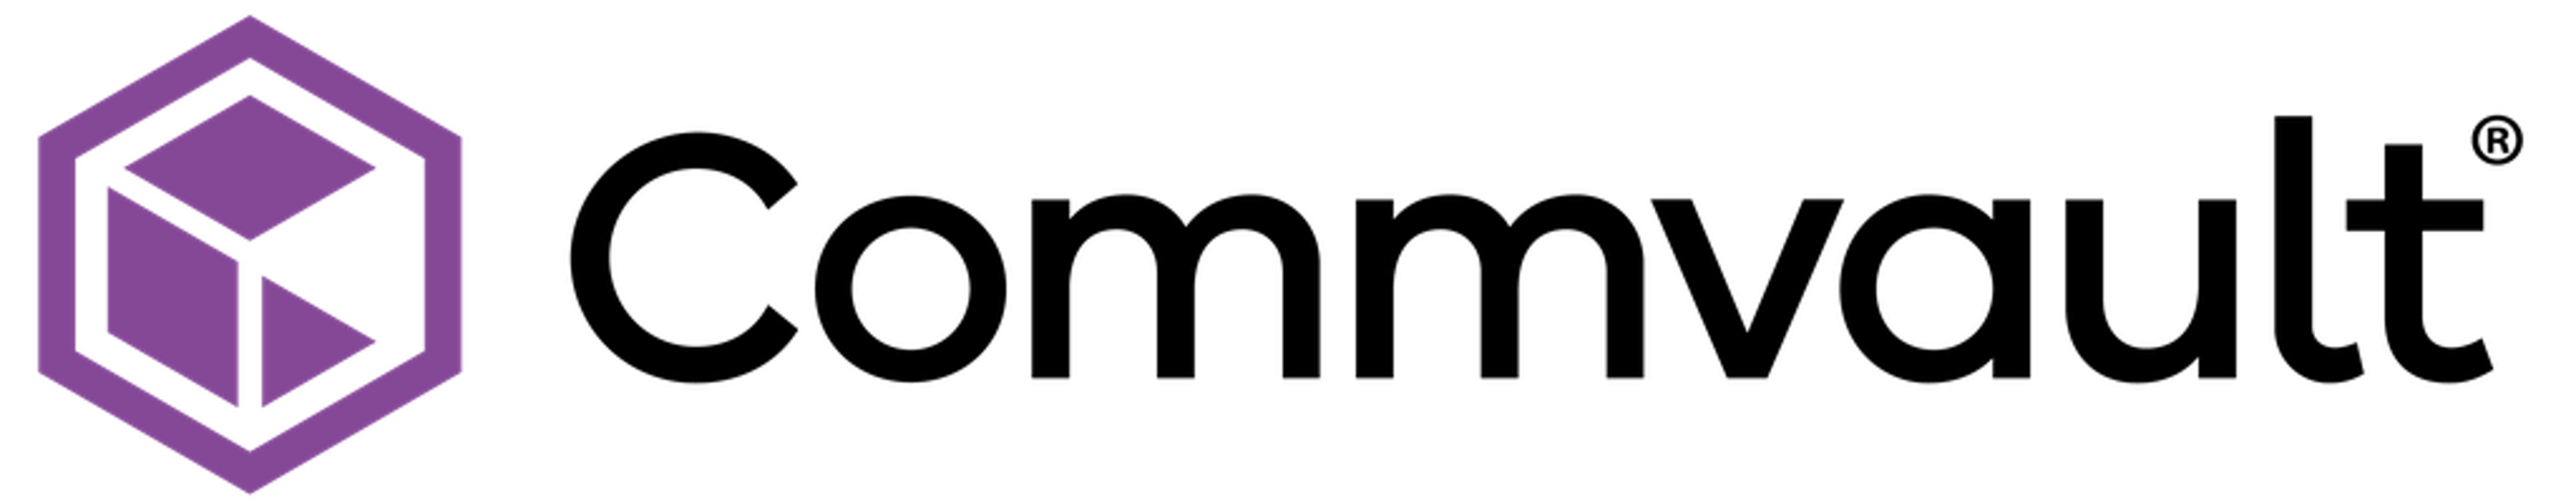 commvault logo full color